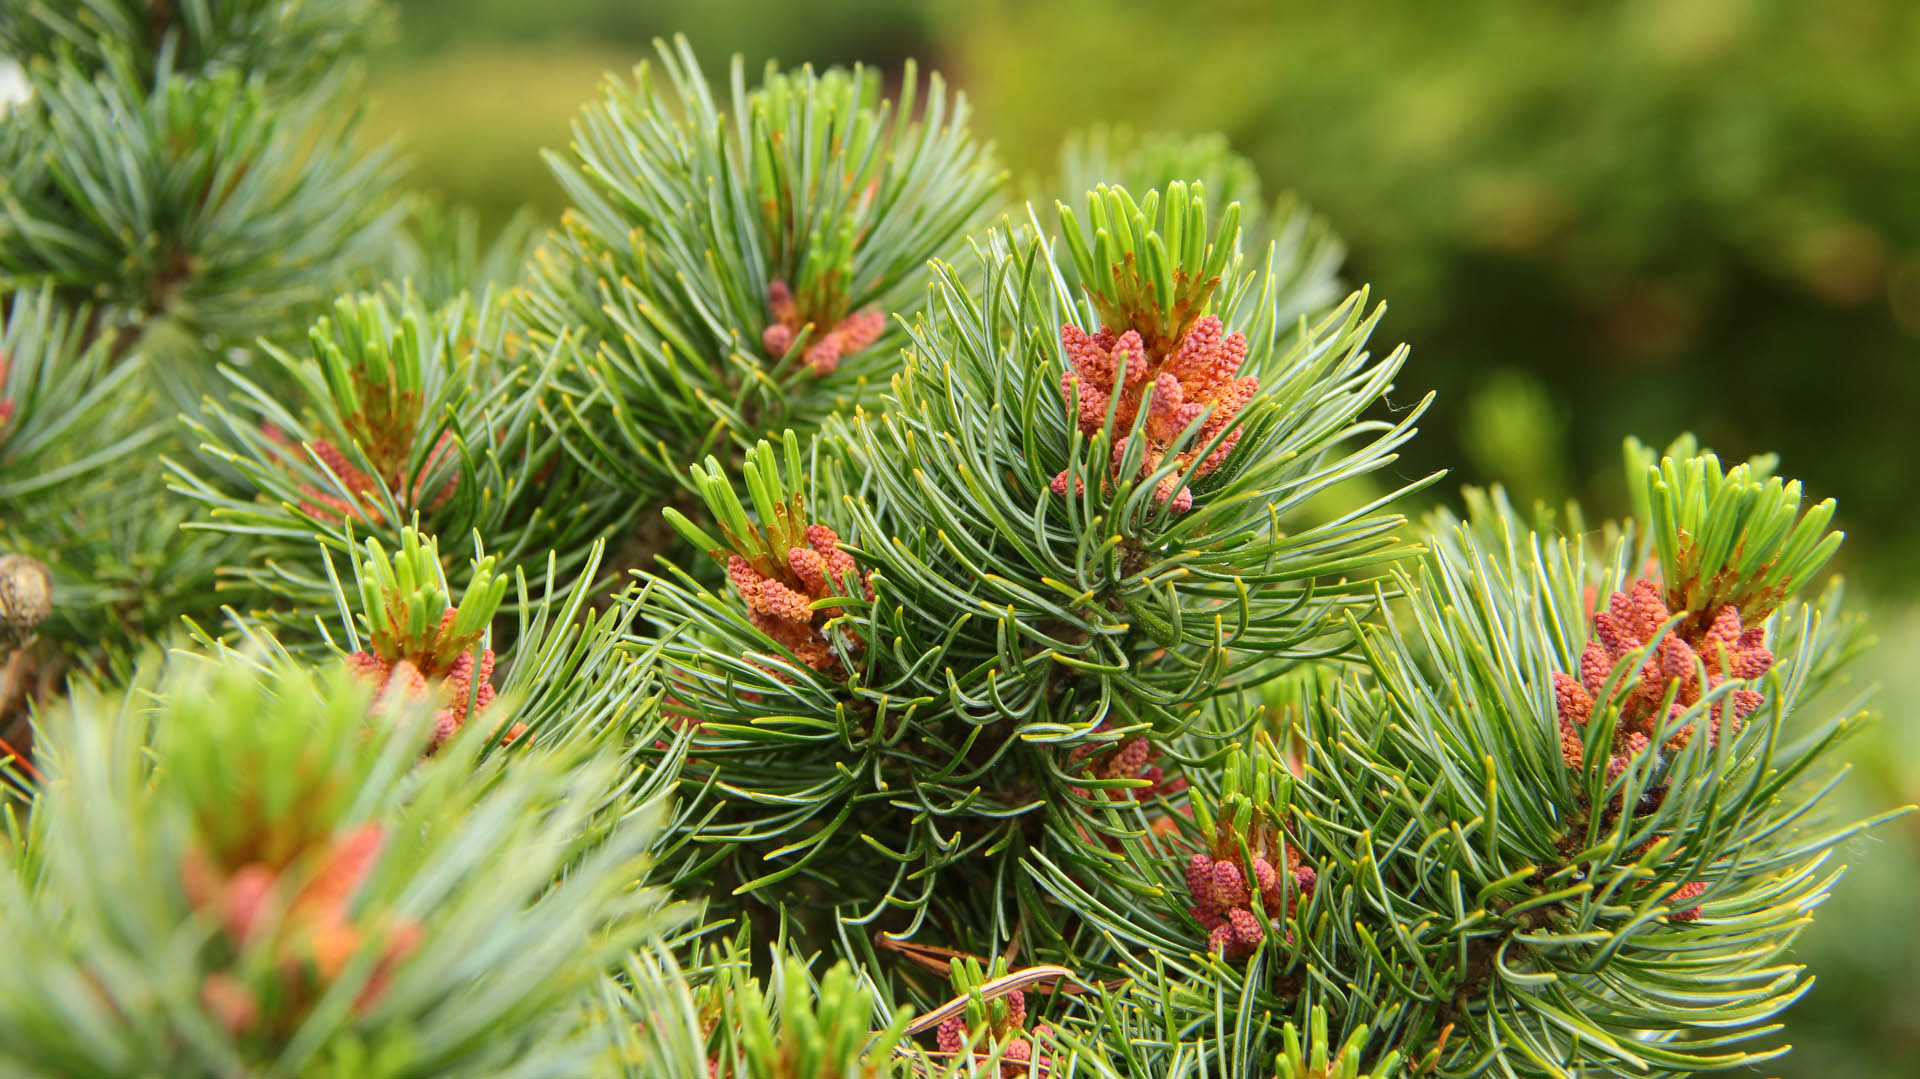 Pinus parviflora ‘Aoba jo’ Japanese White Pine